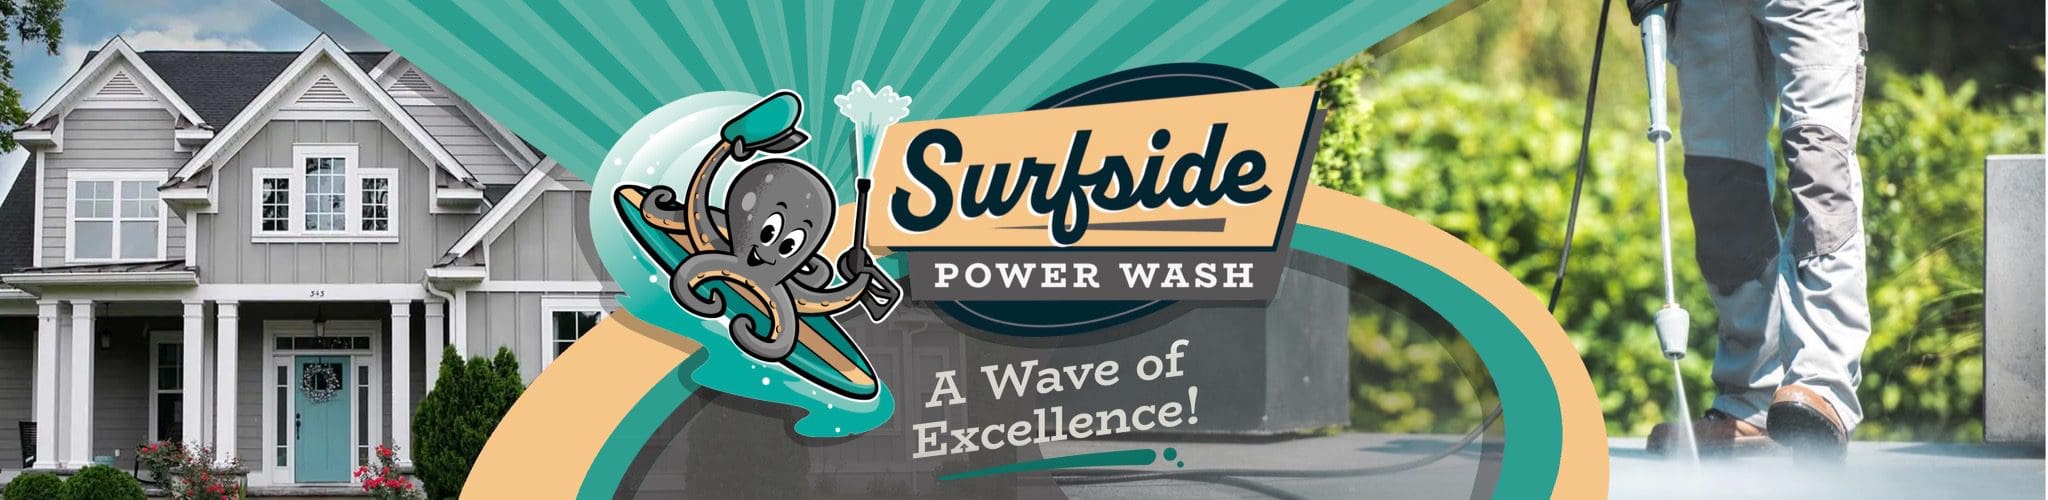 Surfside Power Wash